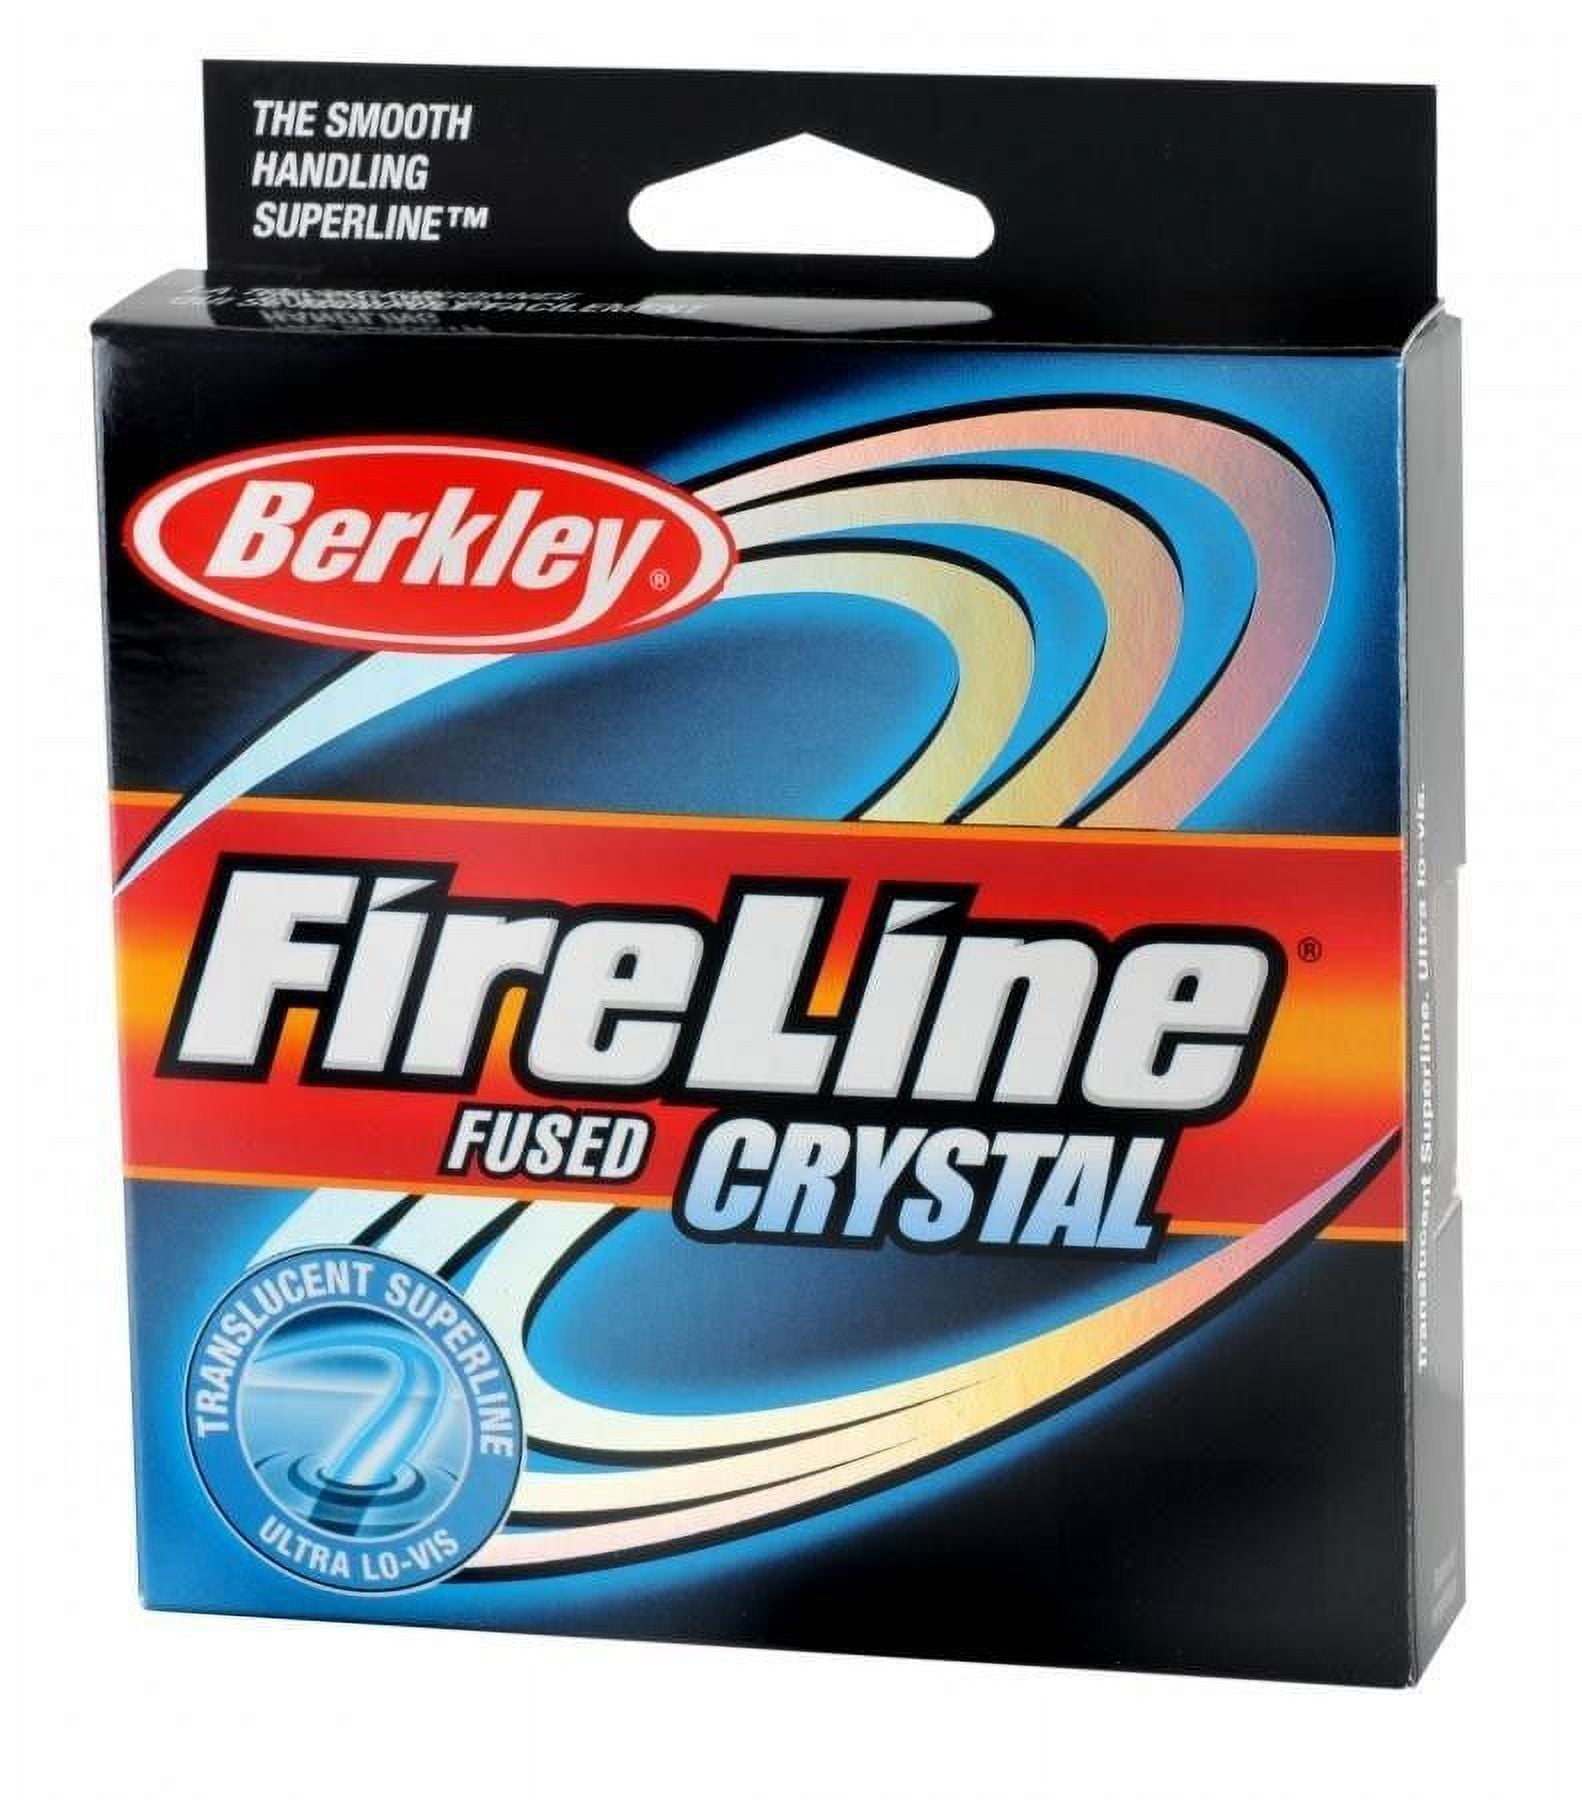 NEW! Lot of 3 Berkley USA Fireline Crystal Braid Superline 20lb 125 yd Fish  Line